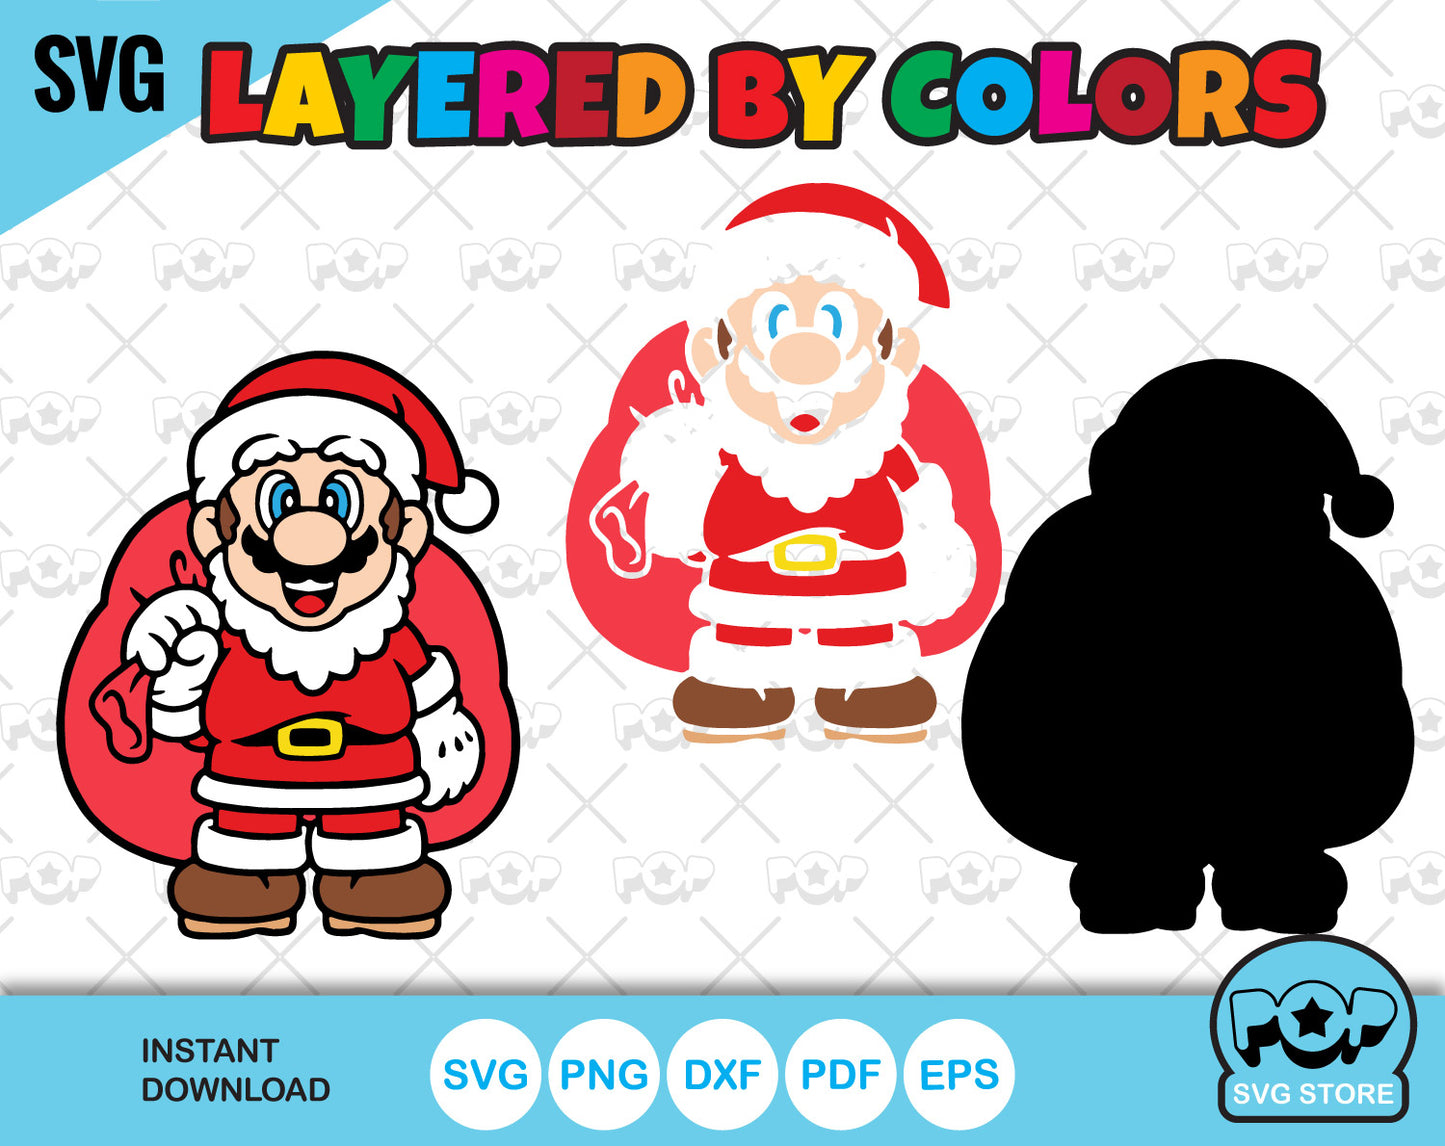 Super Mario Christmas clipart bundle, Mario Christmas SVG cut files for Cricut / Silhouette, PNG, DXF, instant download